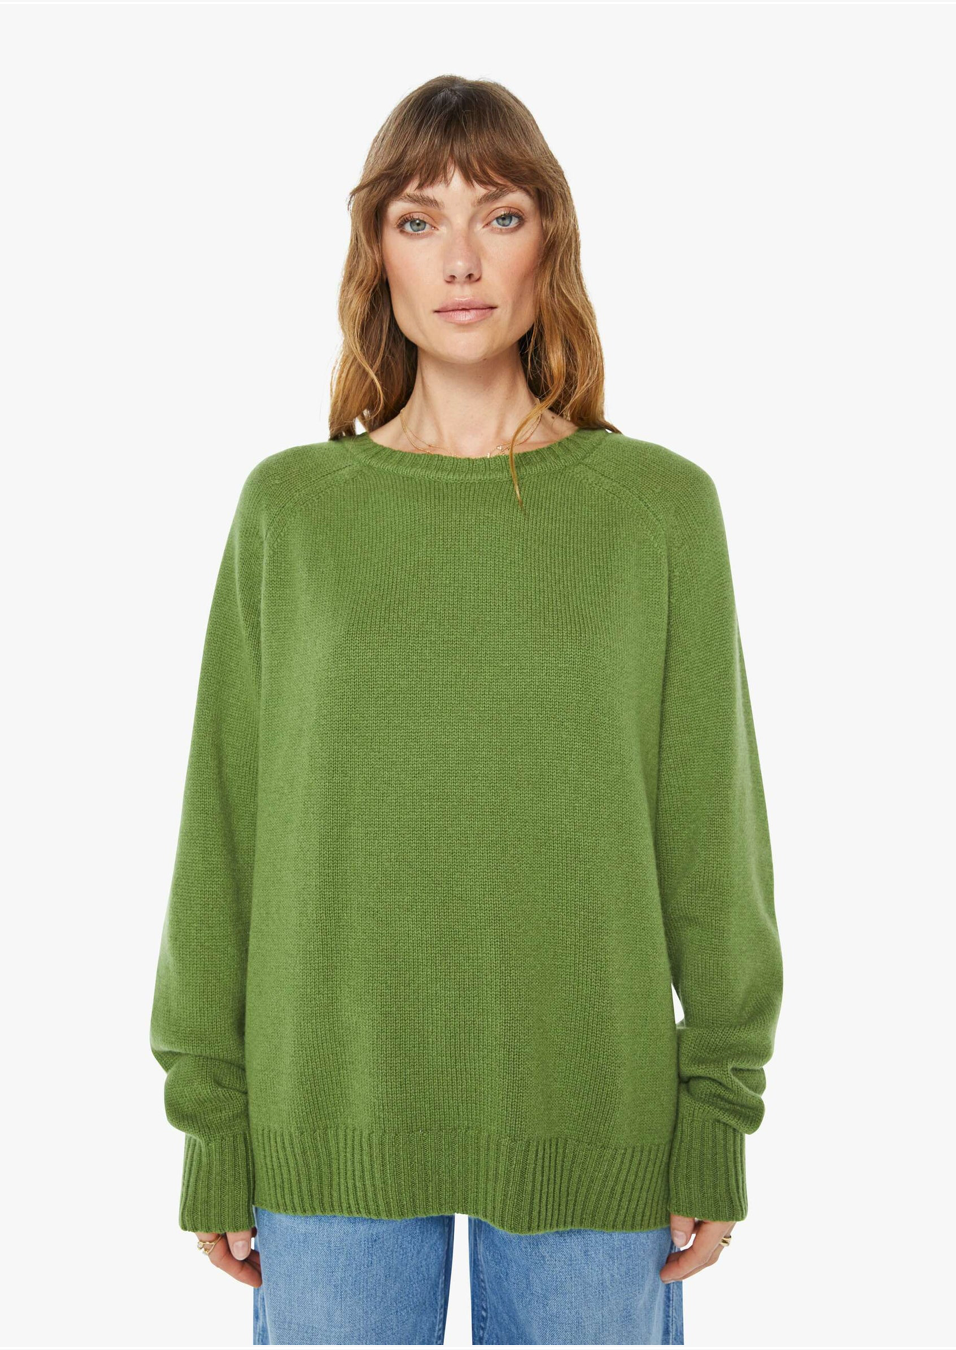 Shop Cashmere, Sweaters, & Sweatshirts